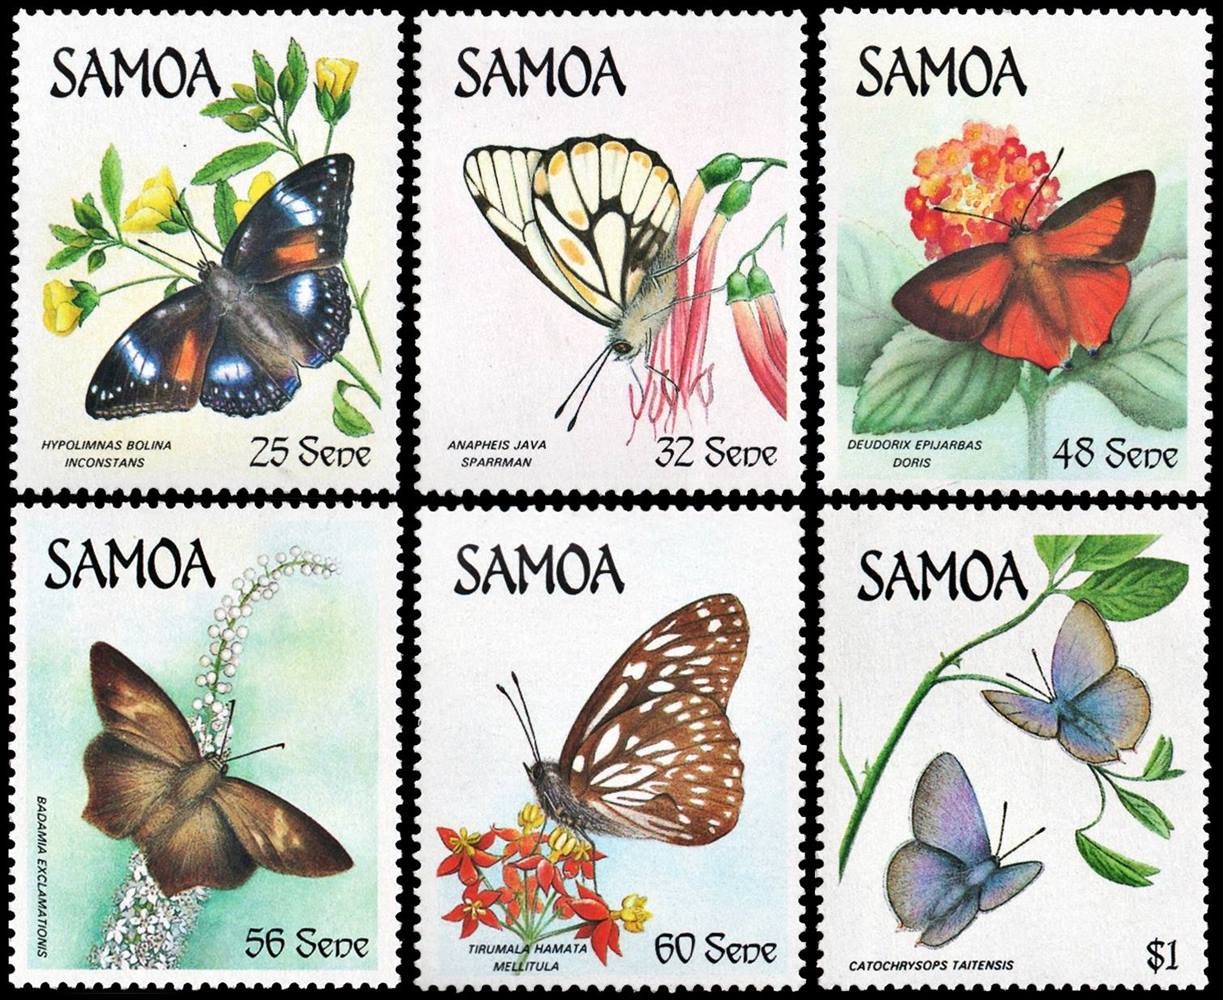 SAMOA/SELLOS, 1996 - MARIPOSAS - YV 597/602 - 6 VALORES - NUEVO